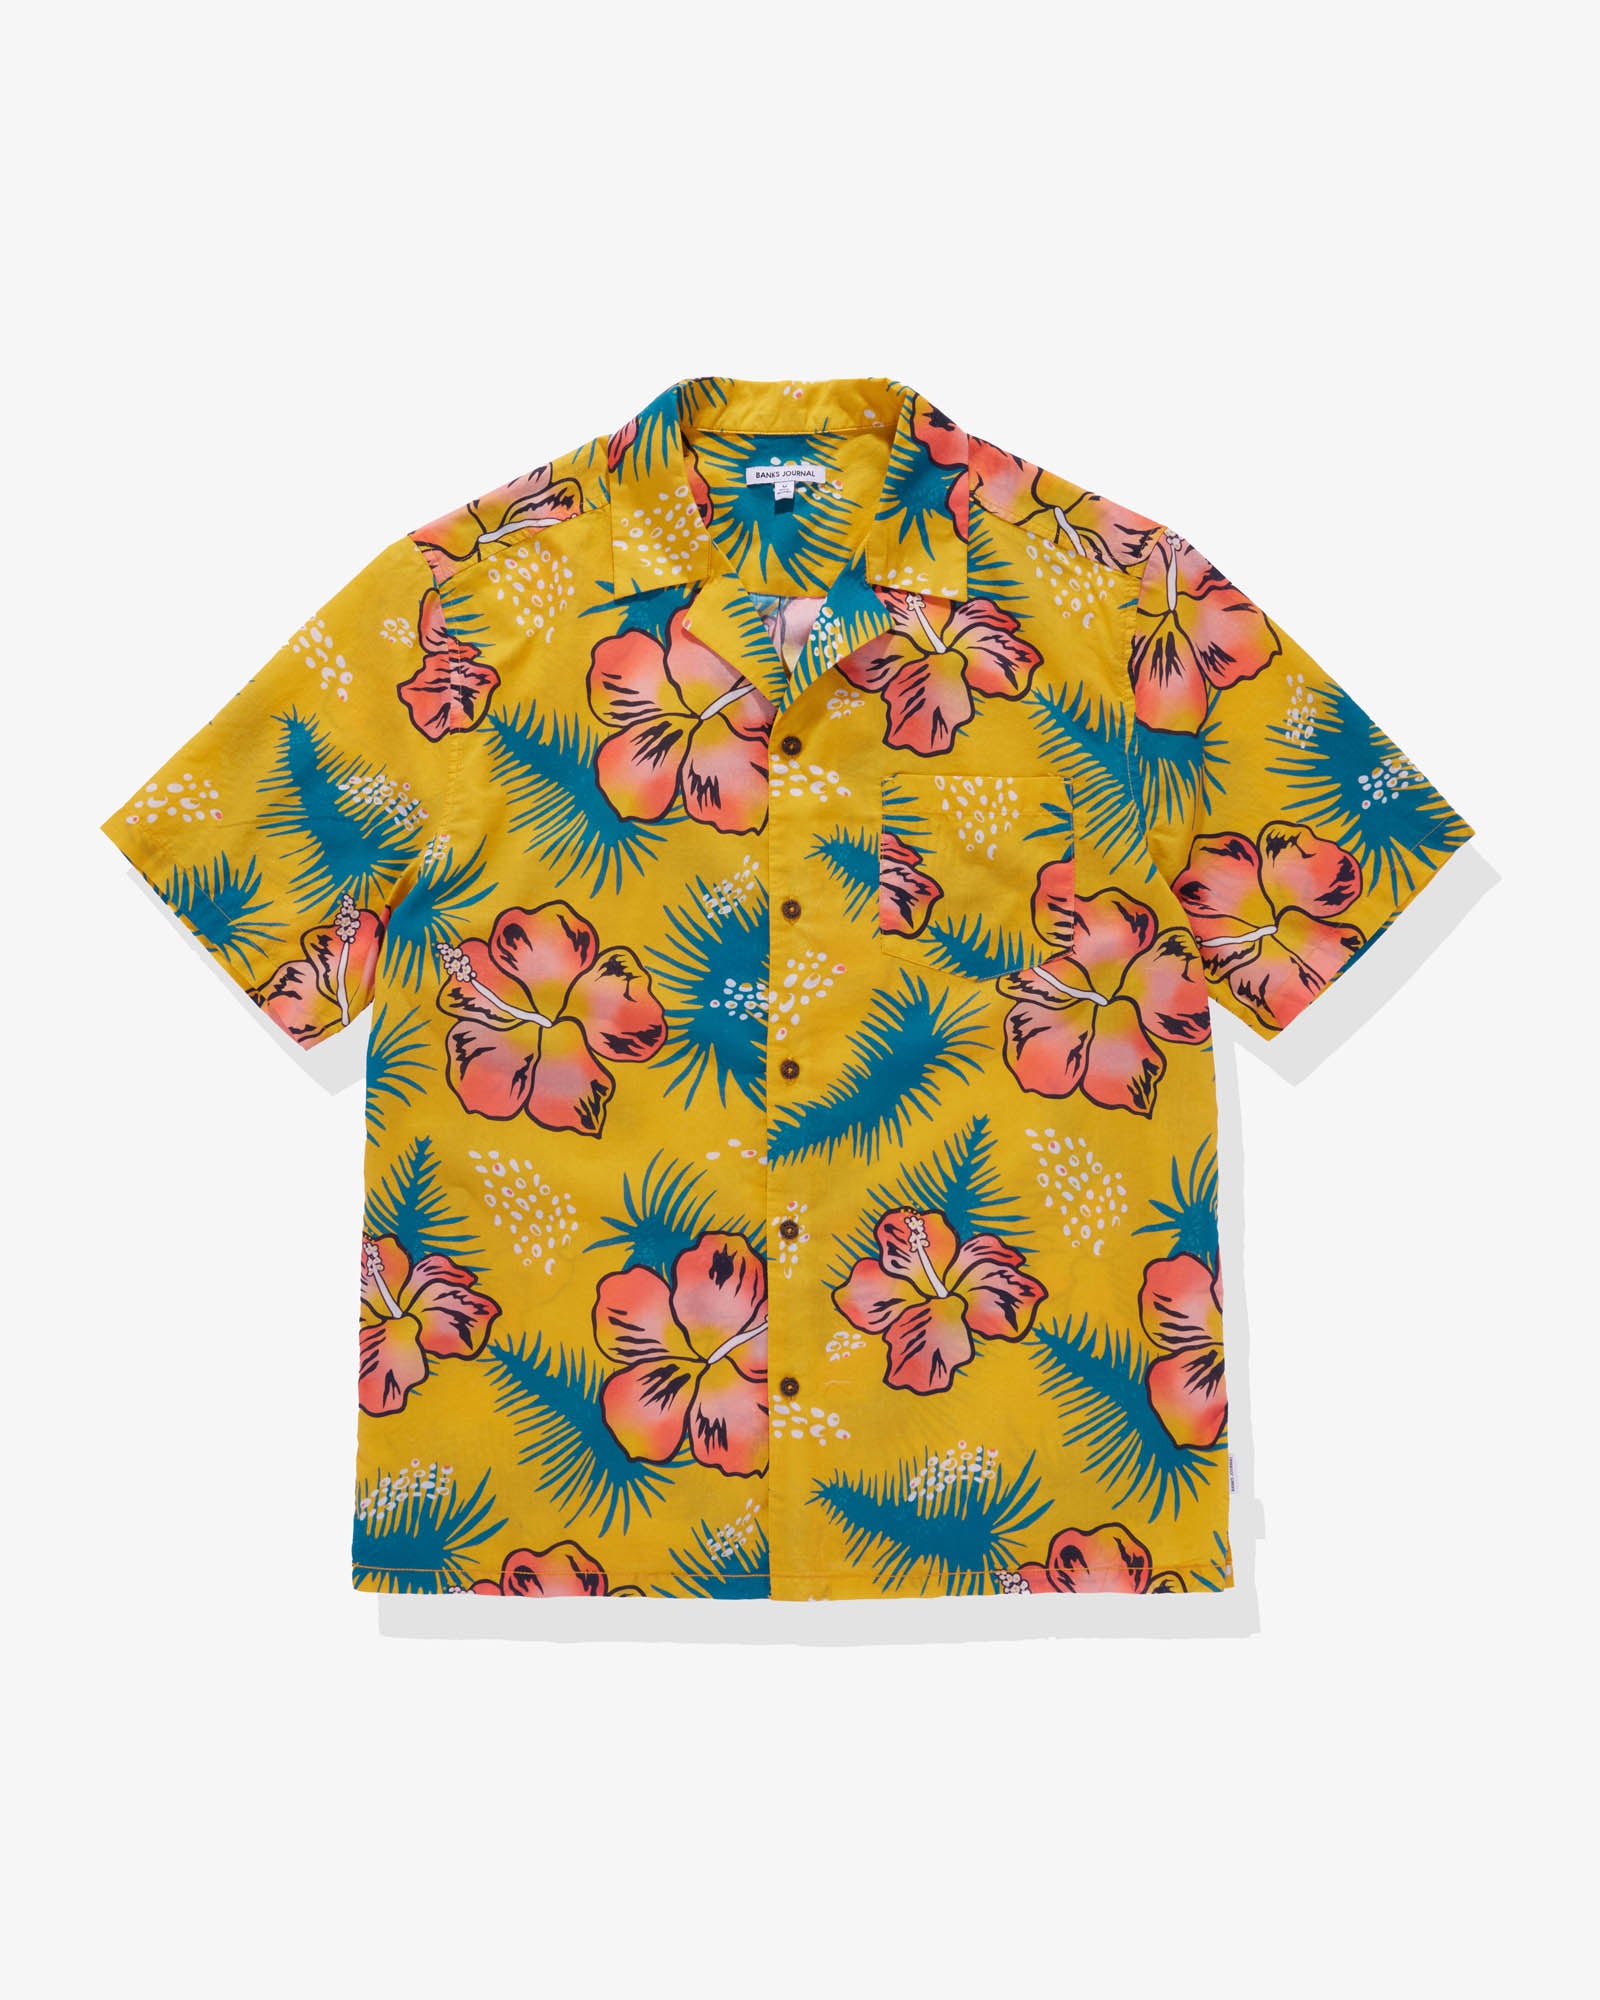 Prim - S/S Woven Shirt